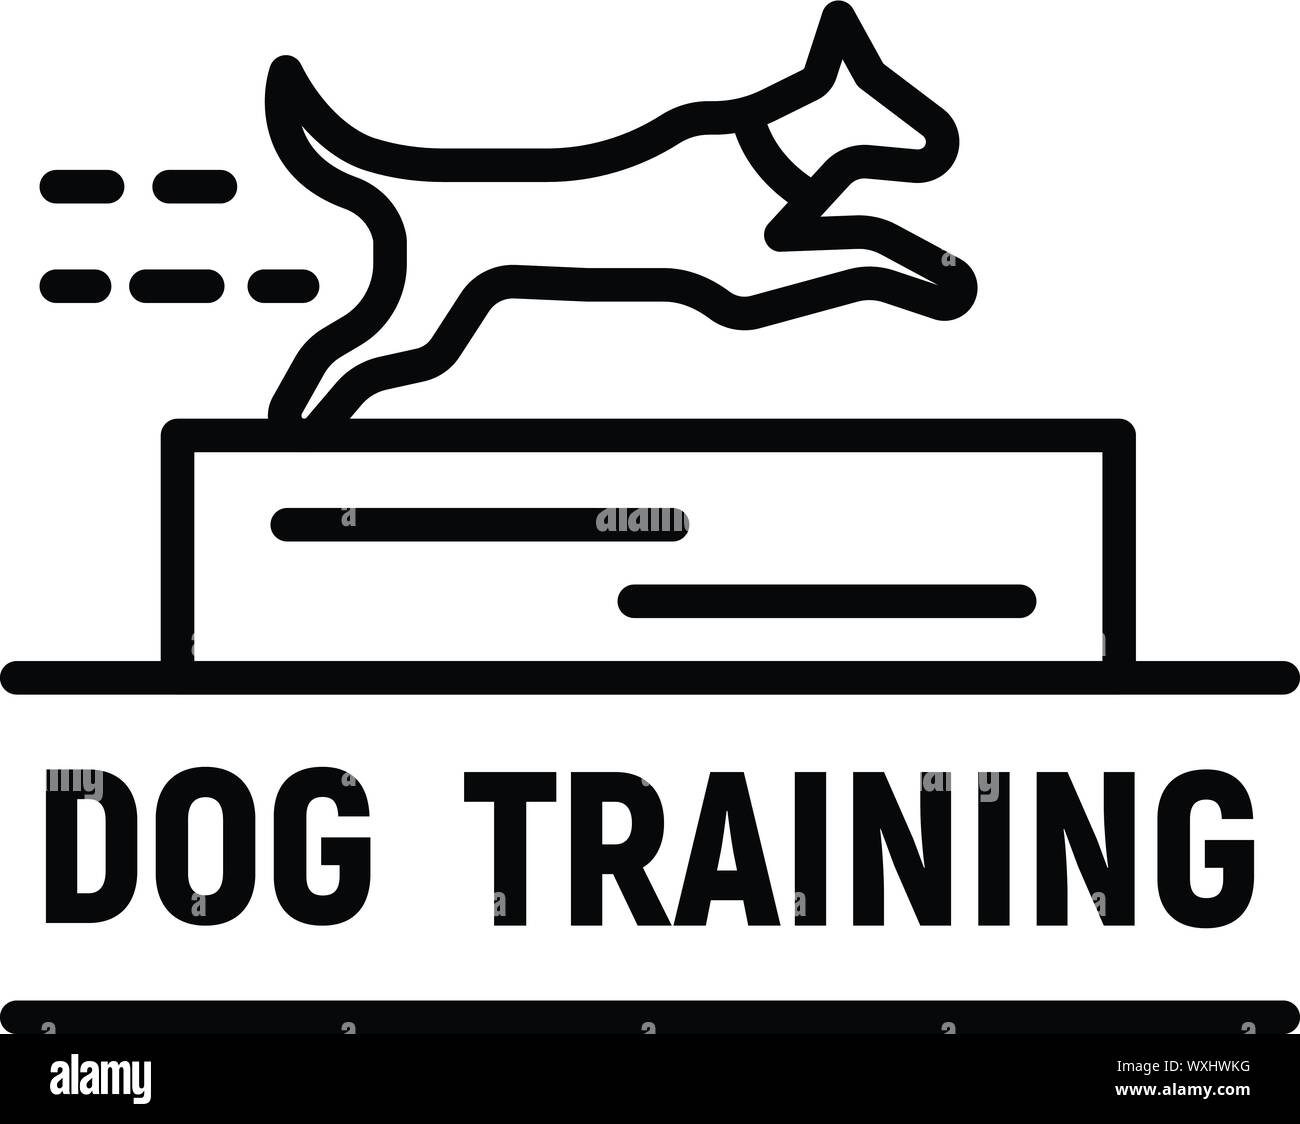 Dog training logo. Outline dog training vector logo for web design isolated on white background Stock Vector